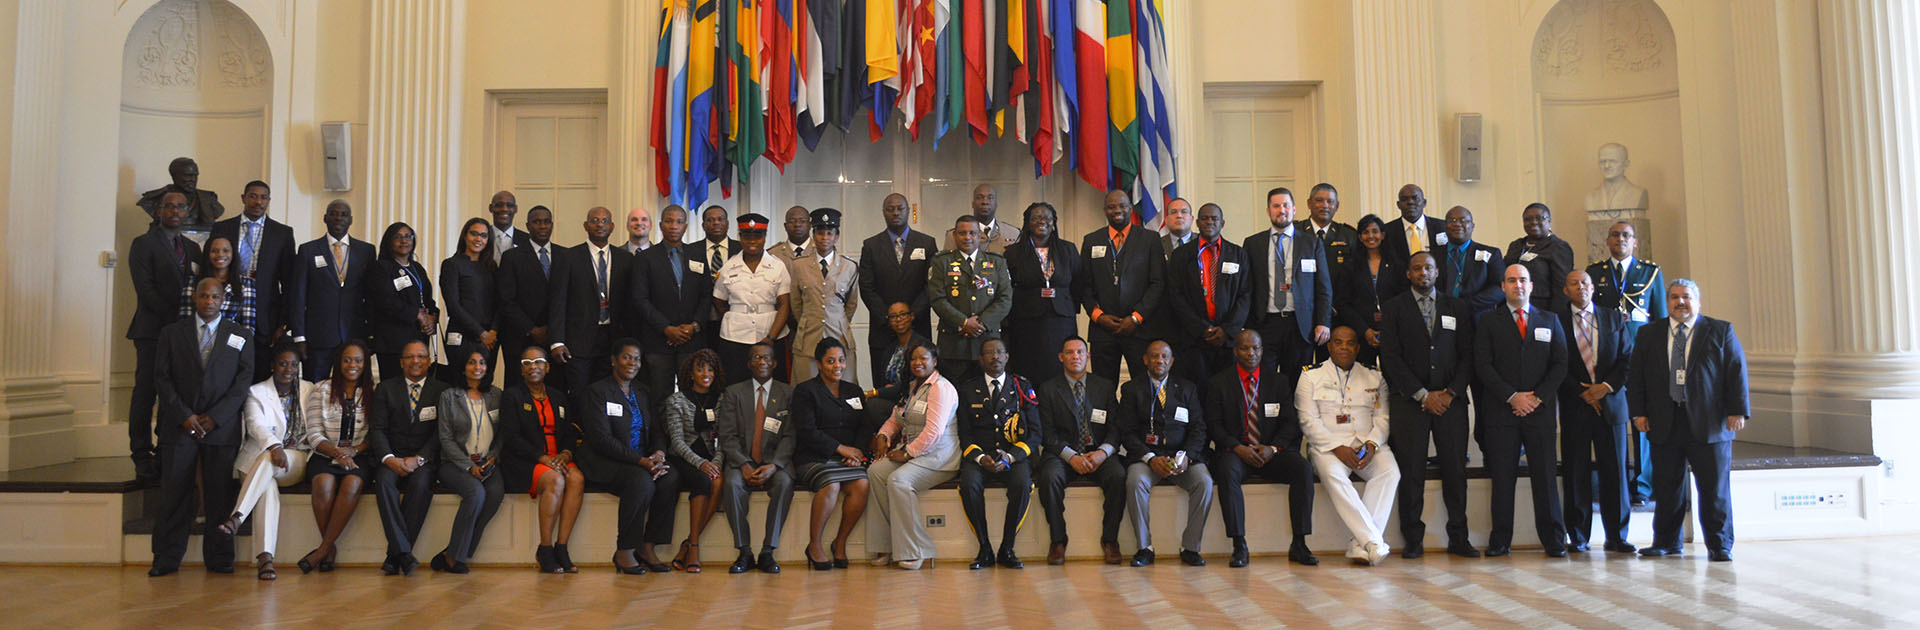 CDSC 2017 Group Photo at the OAS